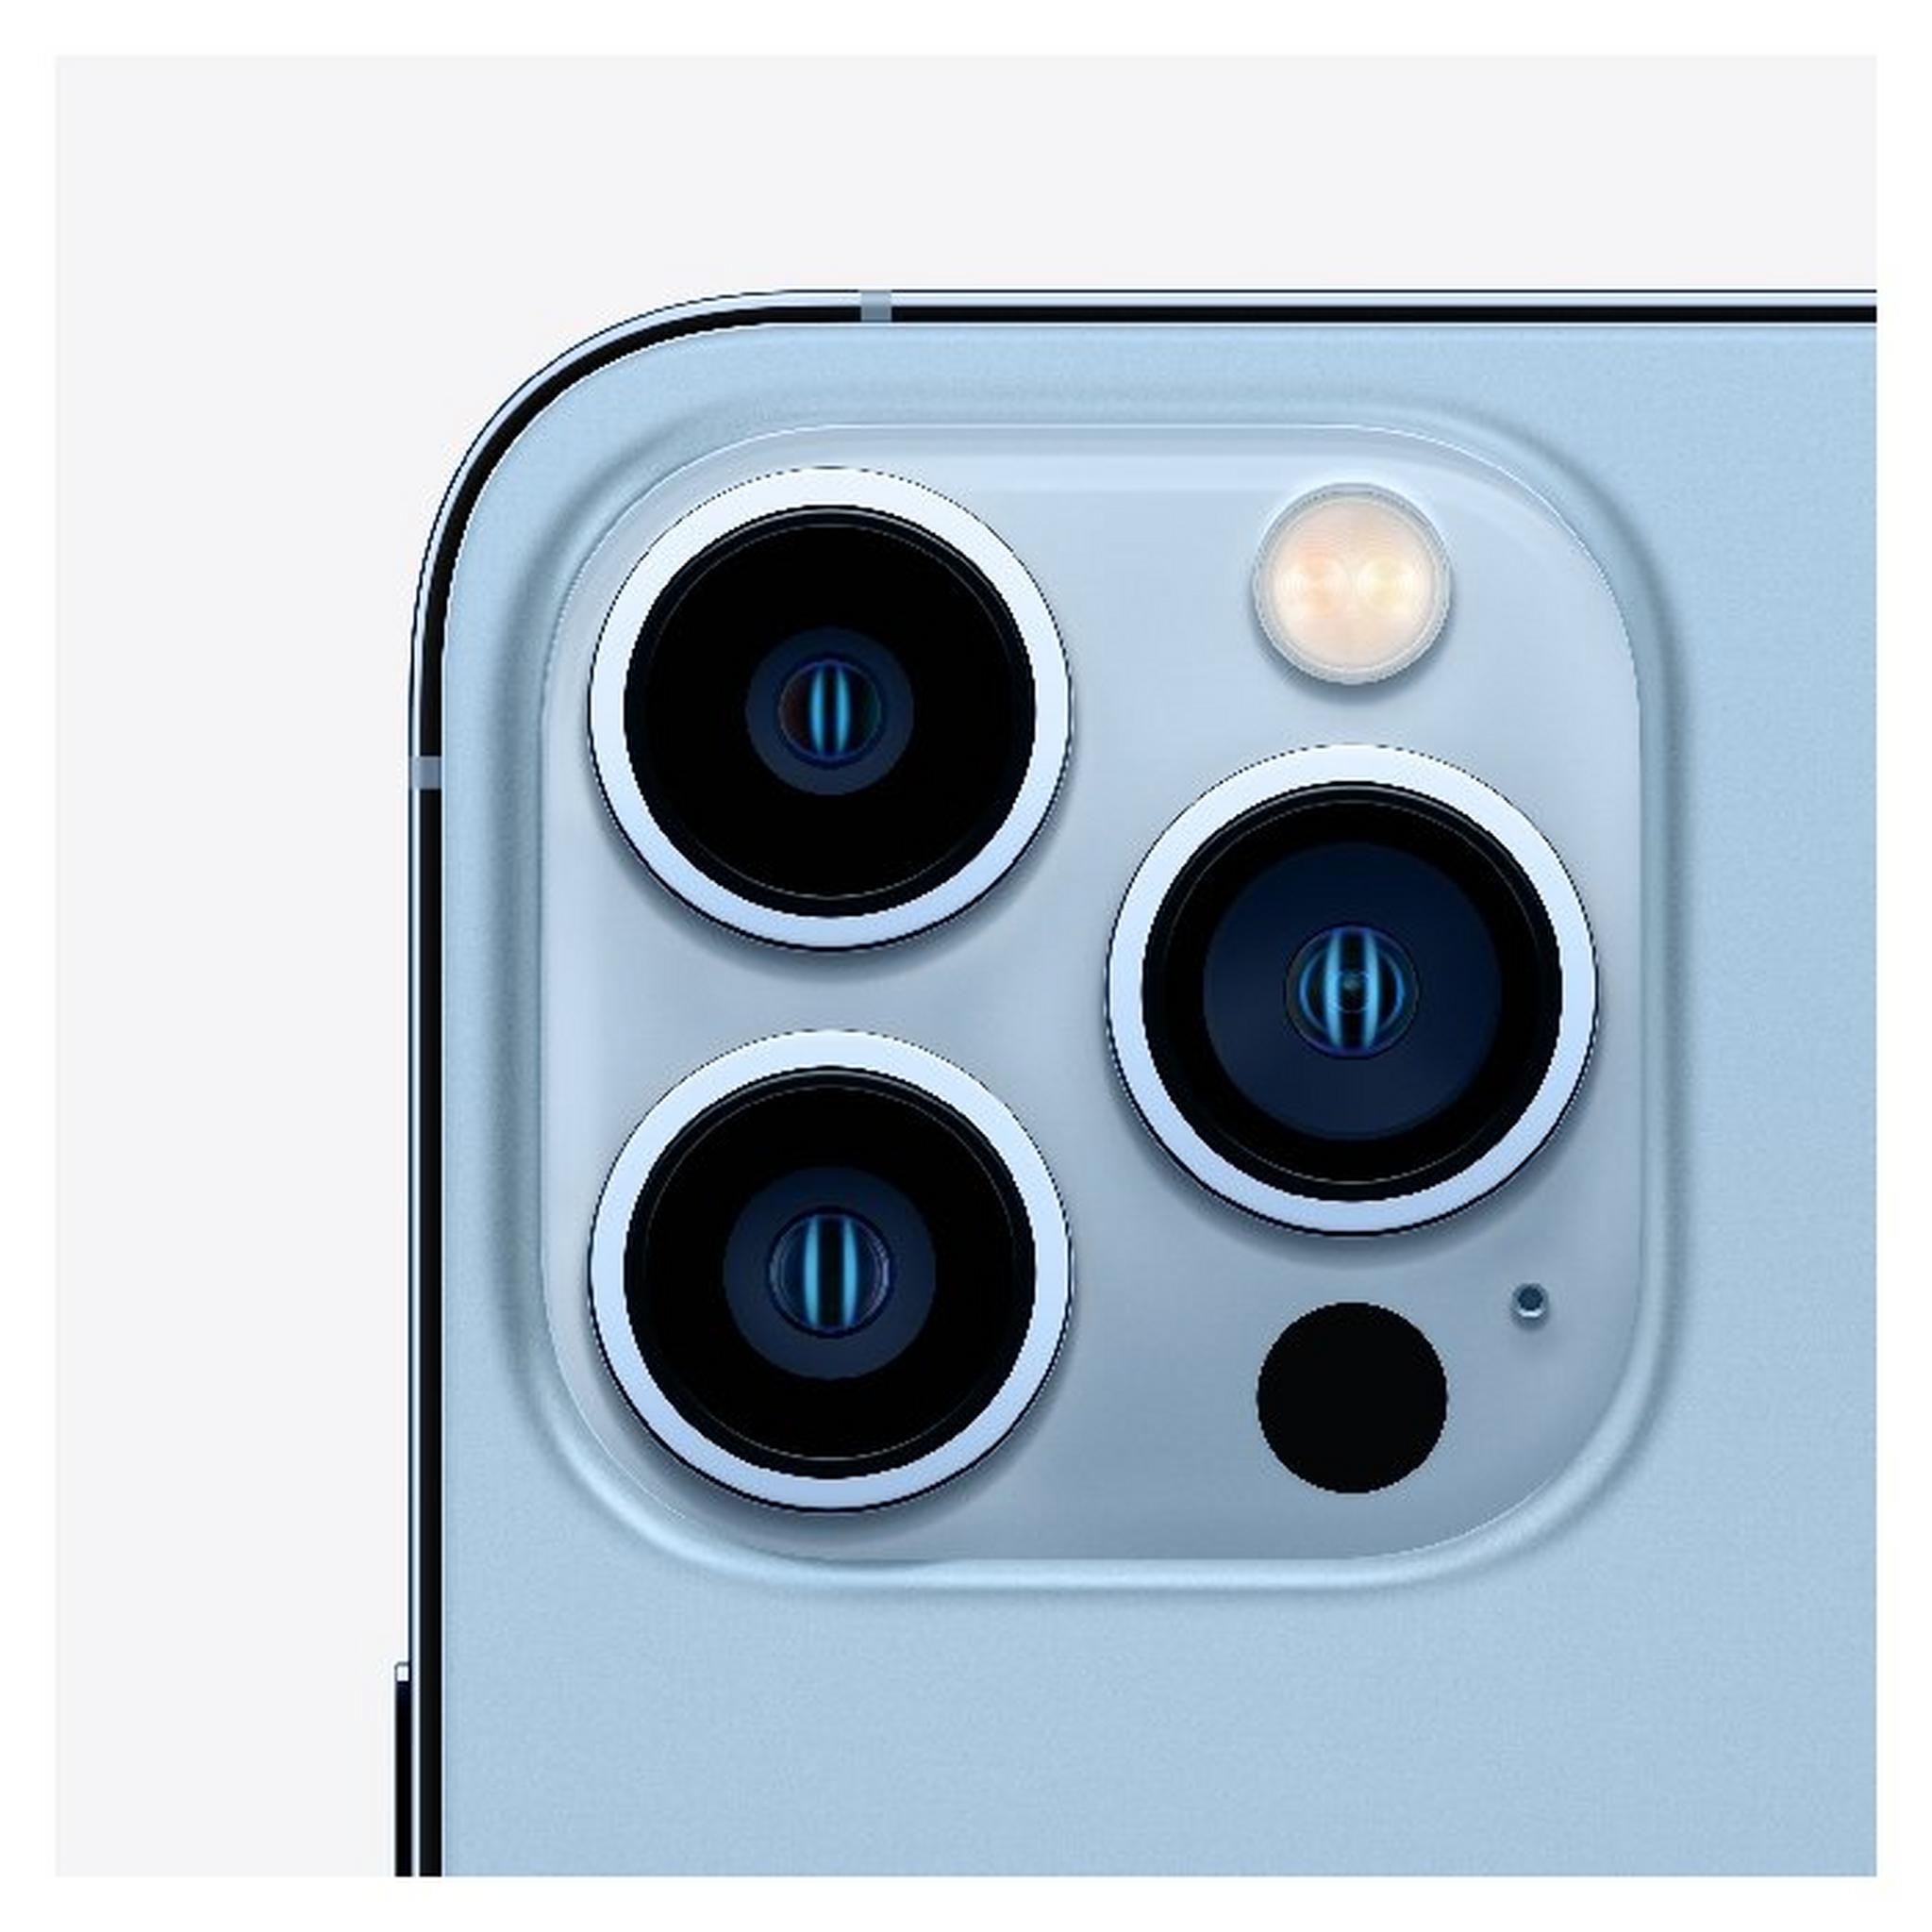 Apple iPhone 13 Pro Max 512GB - Sierra Blue